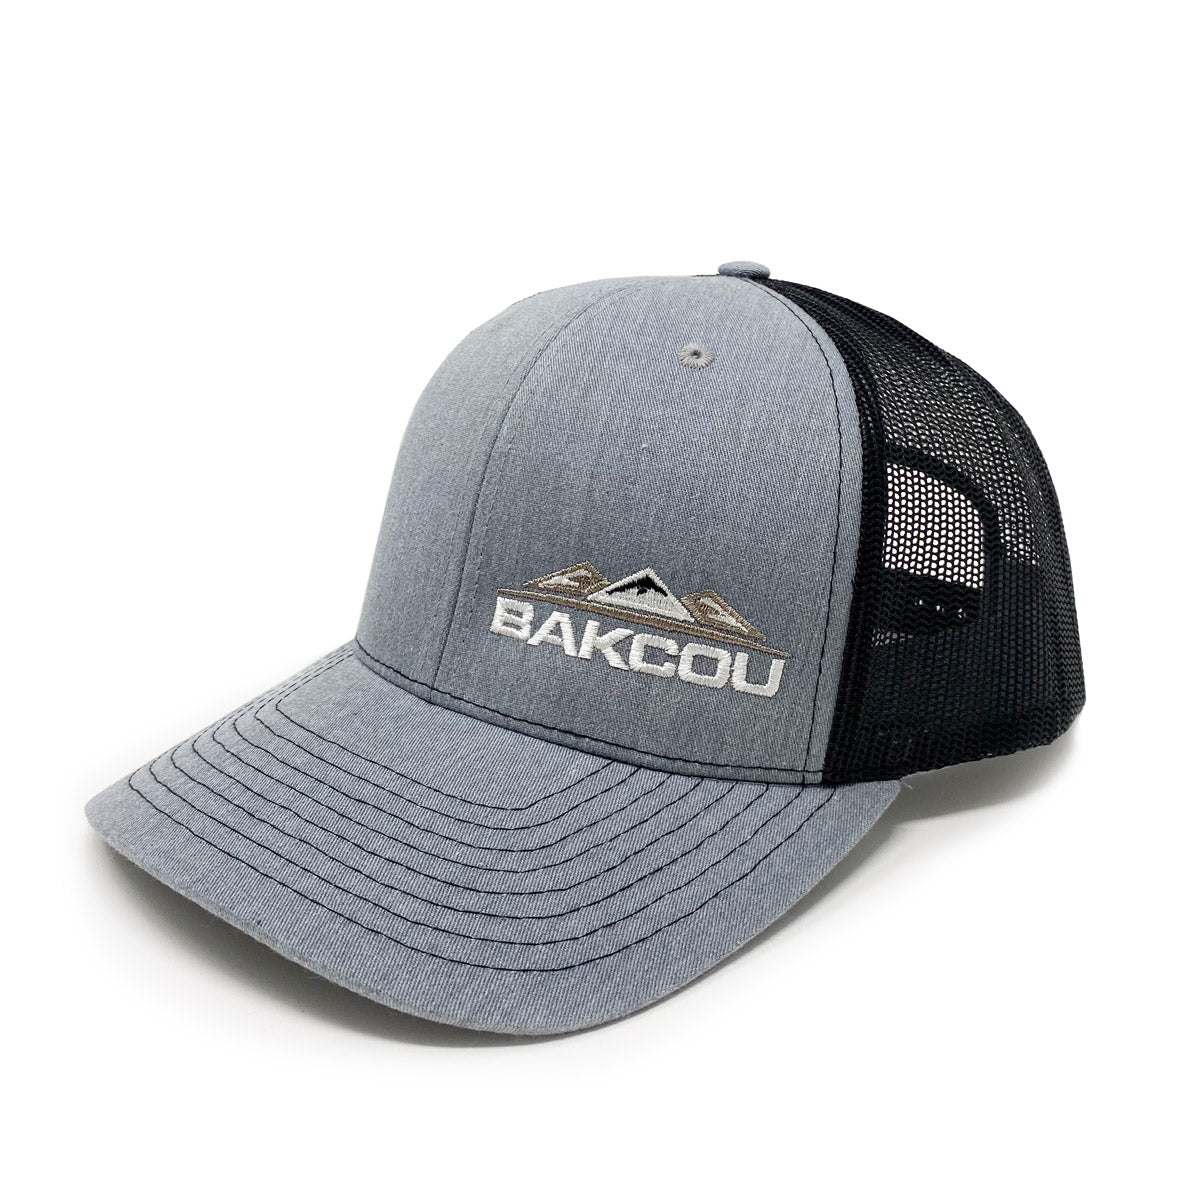 Bakcou Trucker Hat - Bakcou